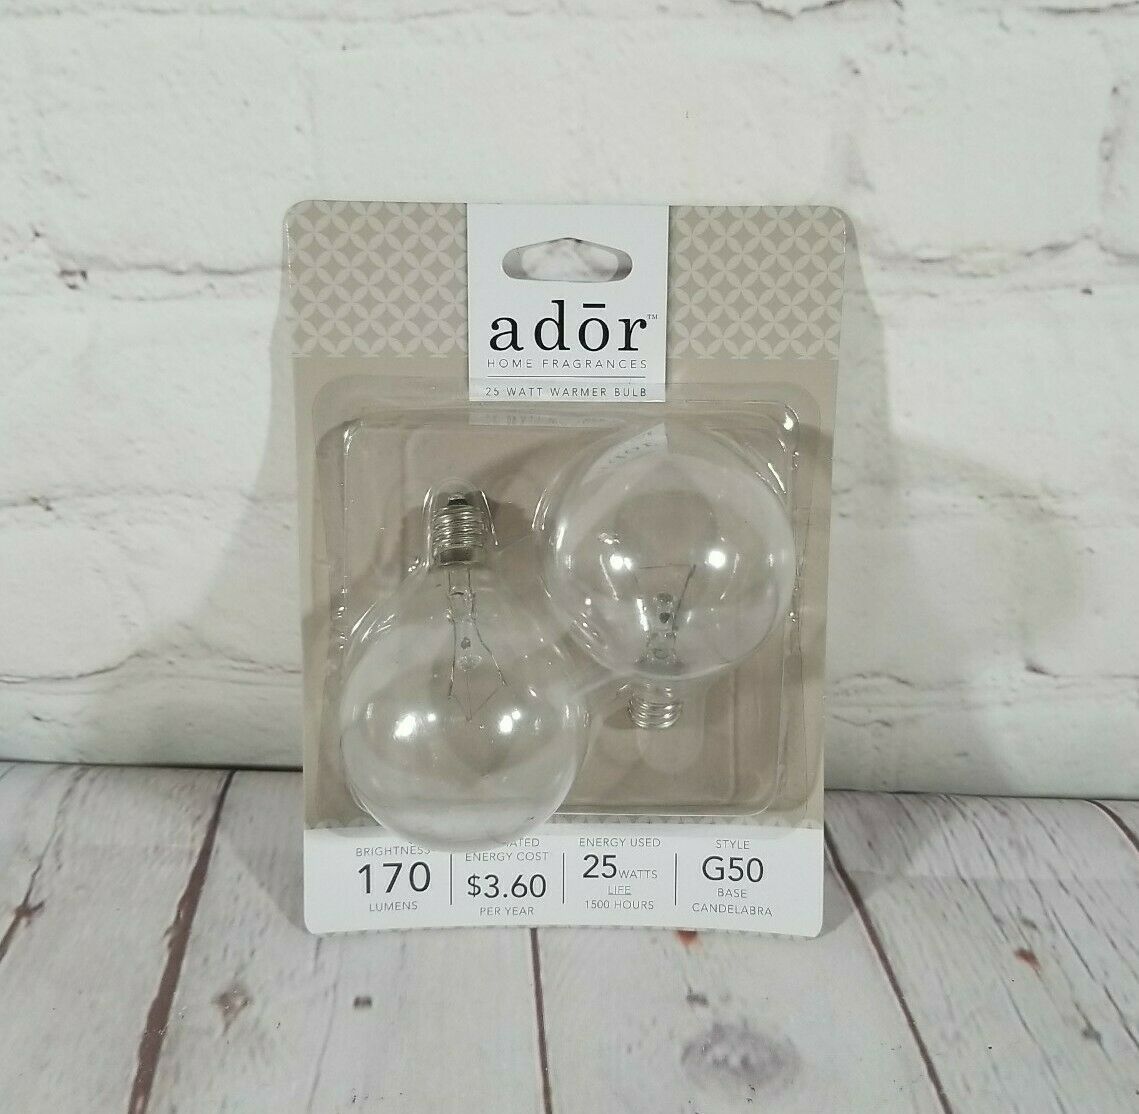 Ador Home Fragances 25 Watt Wax Warmer Bulb 2-Pack G50 Style Base Candelabra